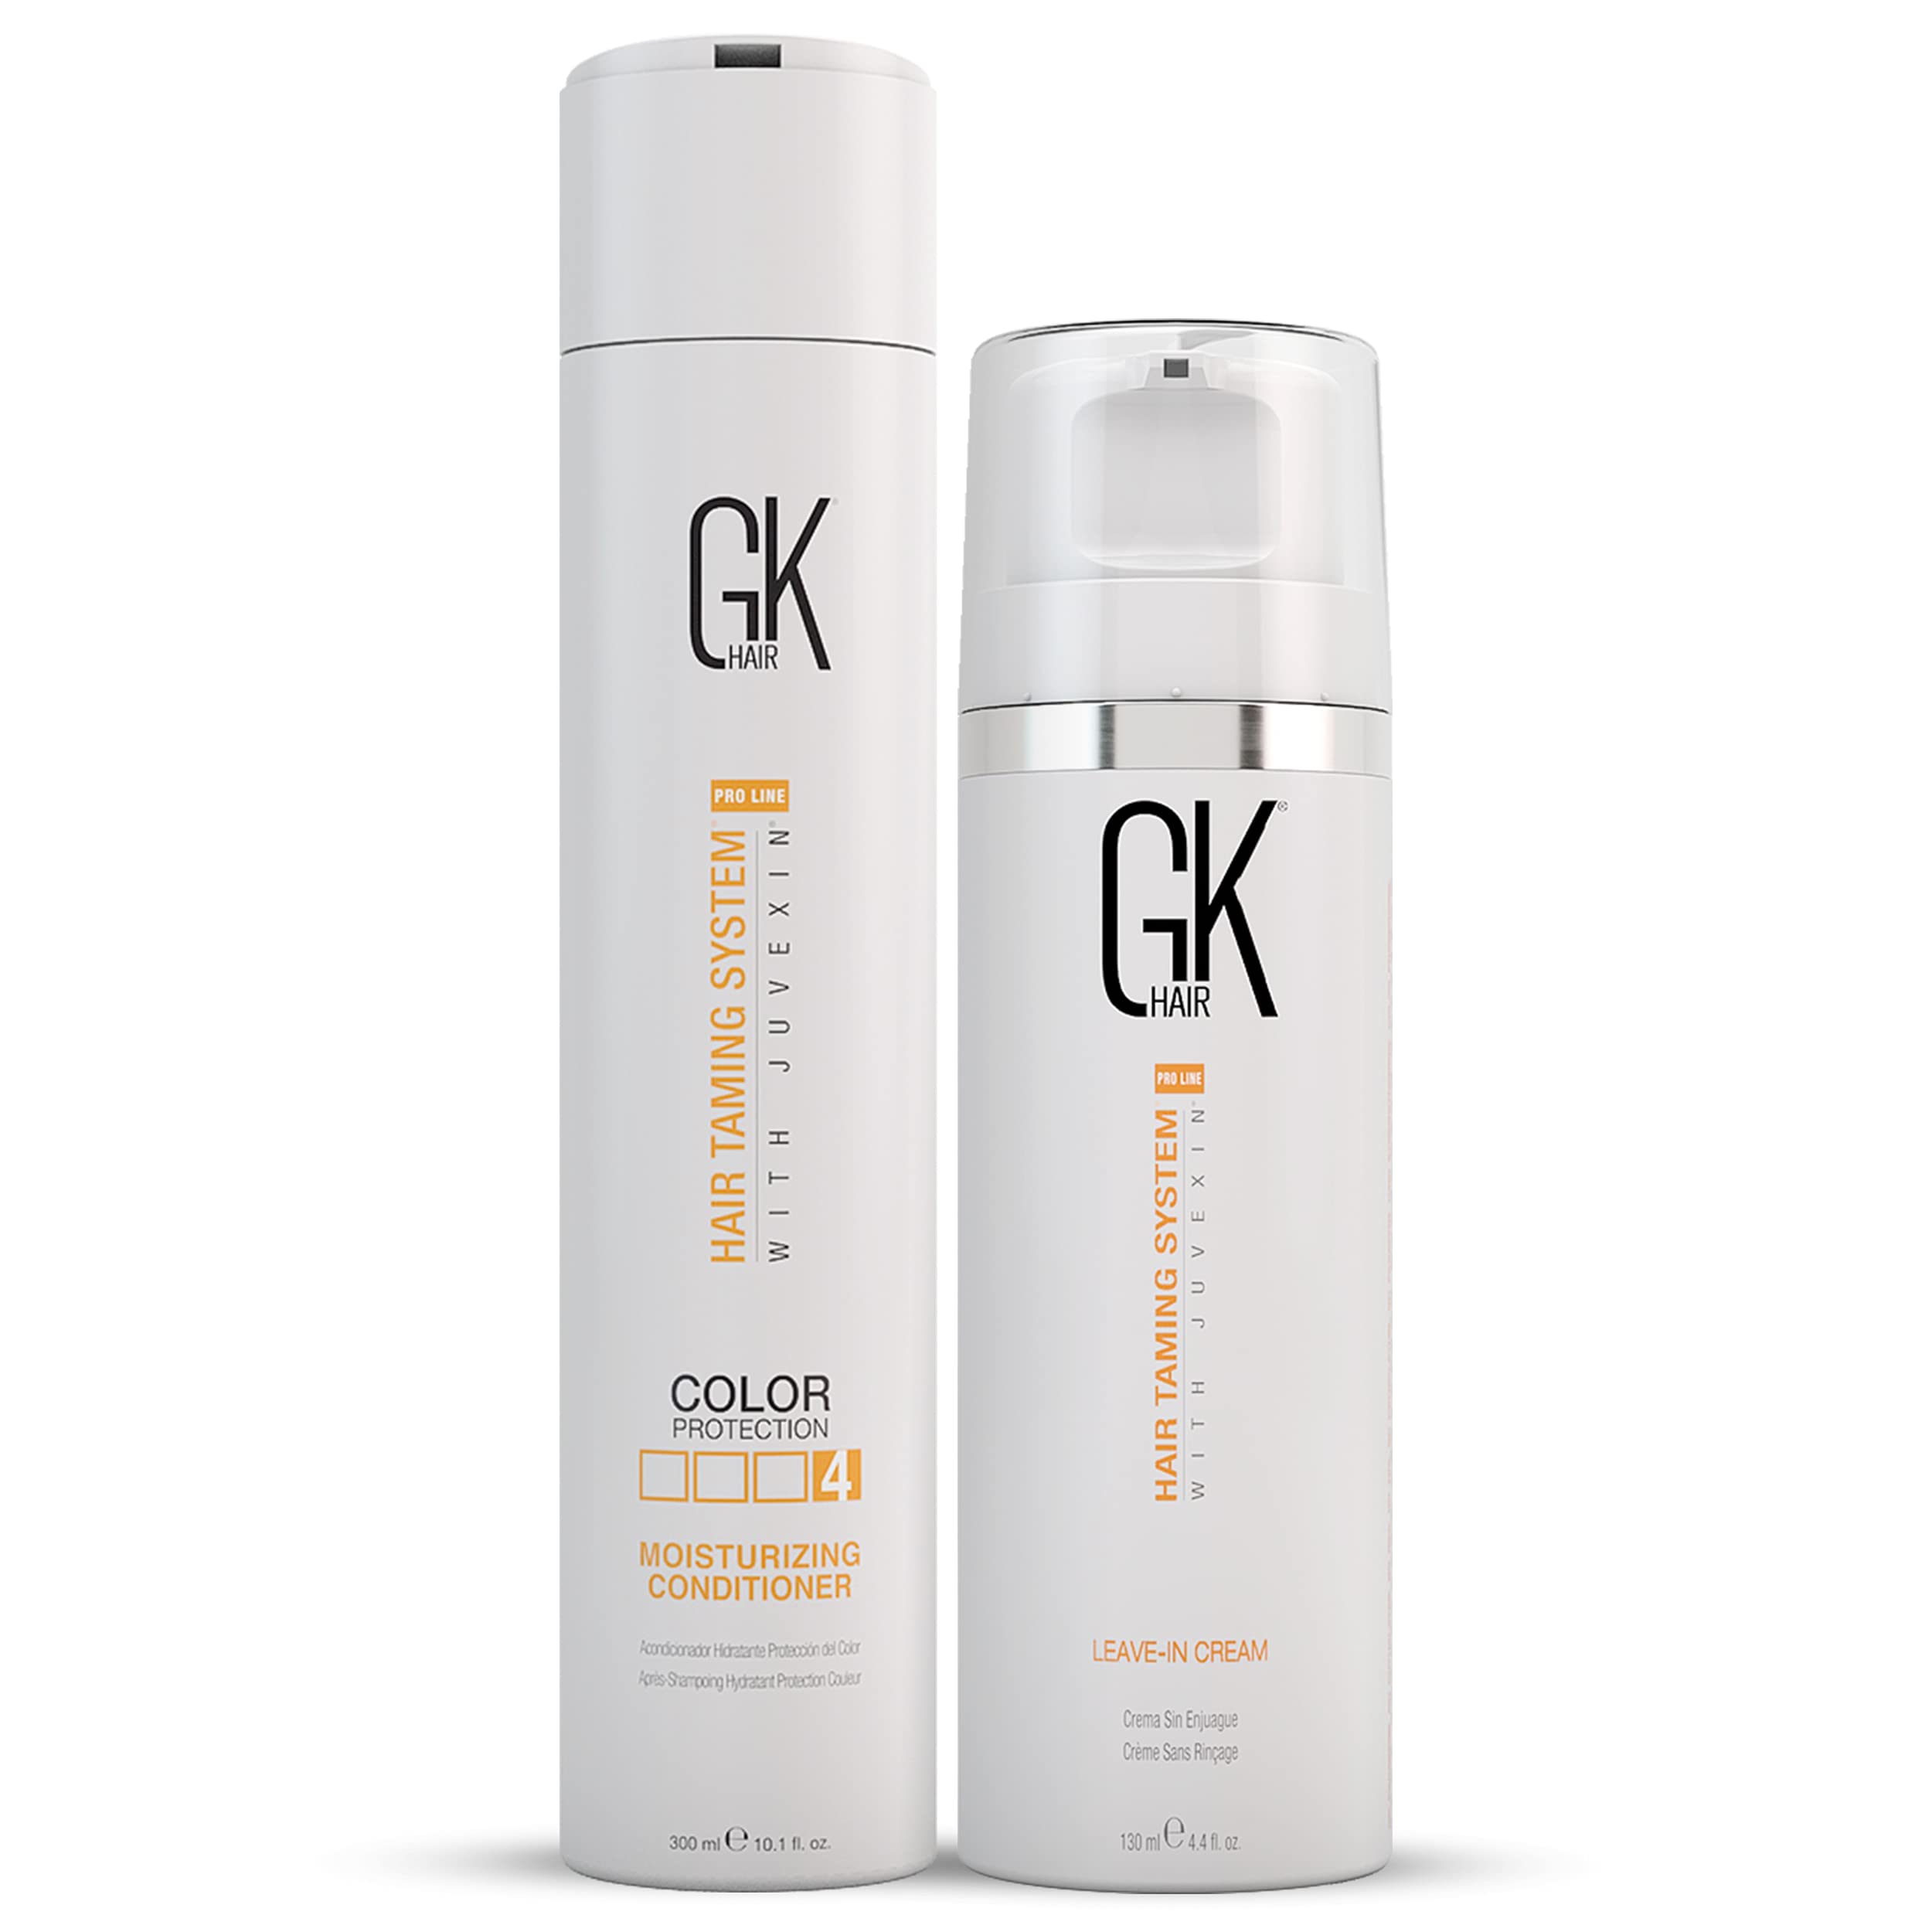 Global Keratin GK Hair Moisturizing Conditioner 300ml I Leave in Conditioner Cream 130ml